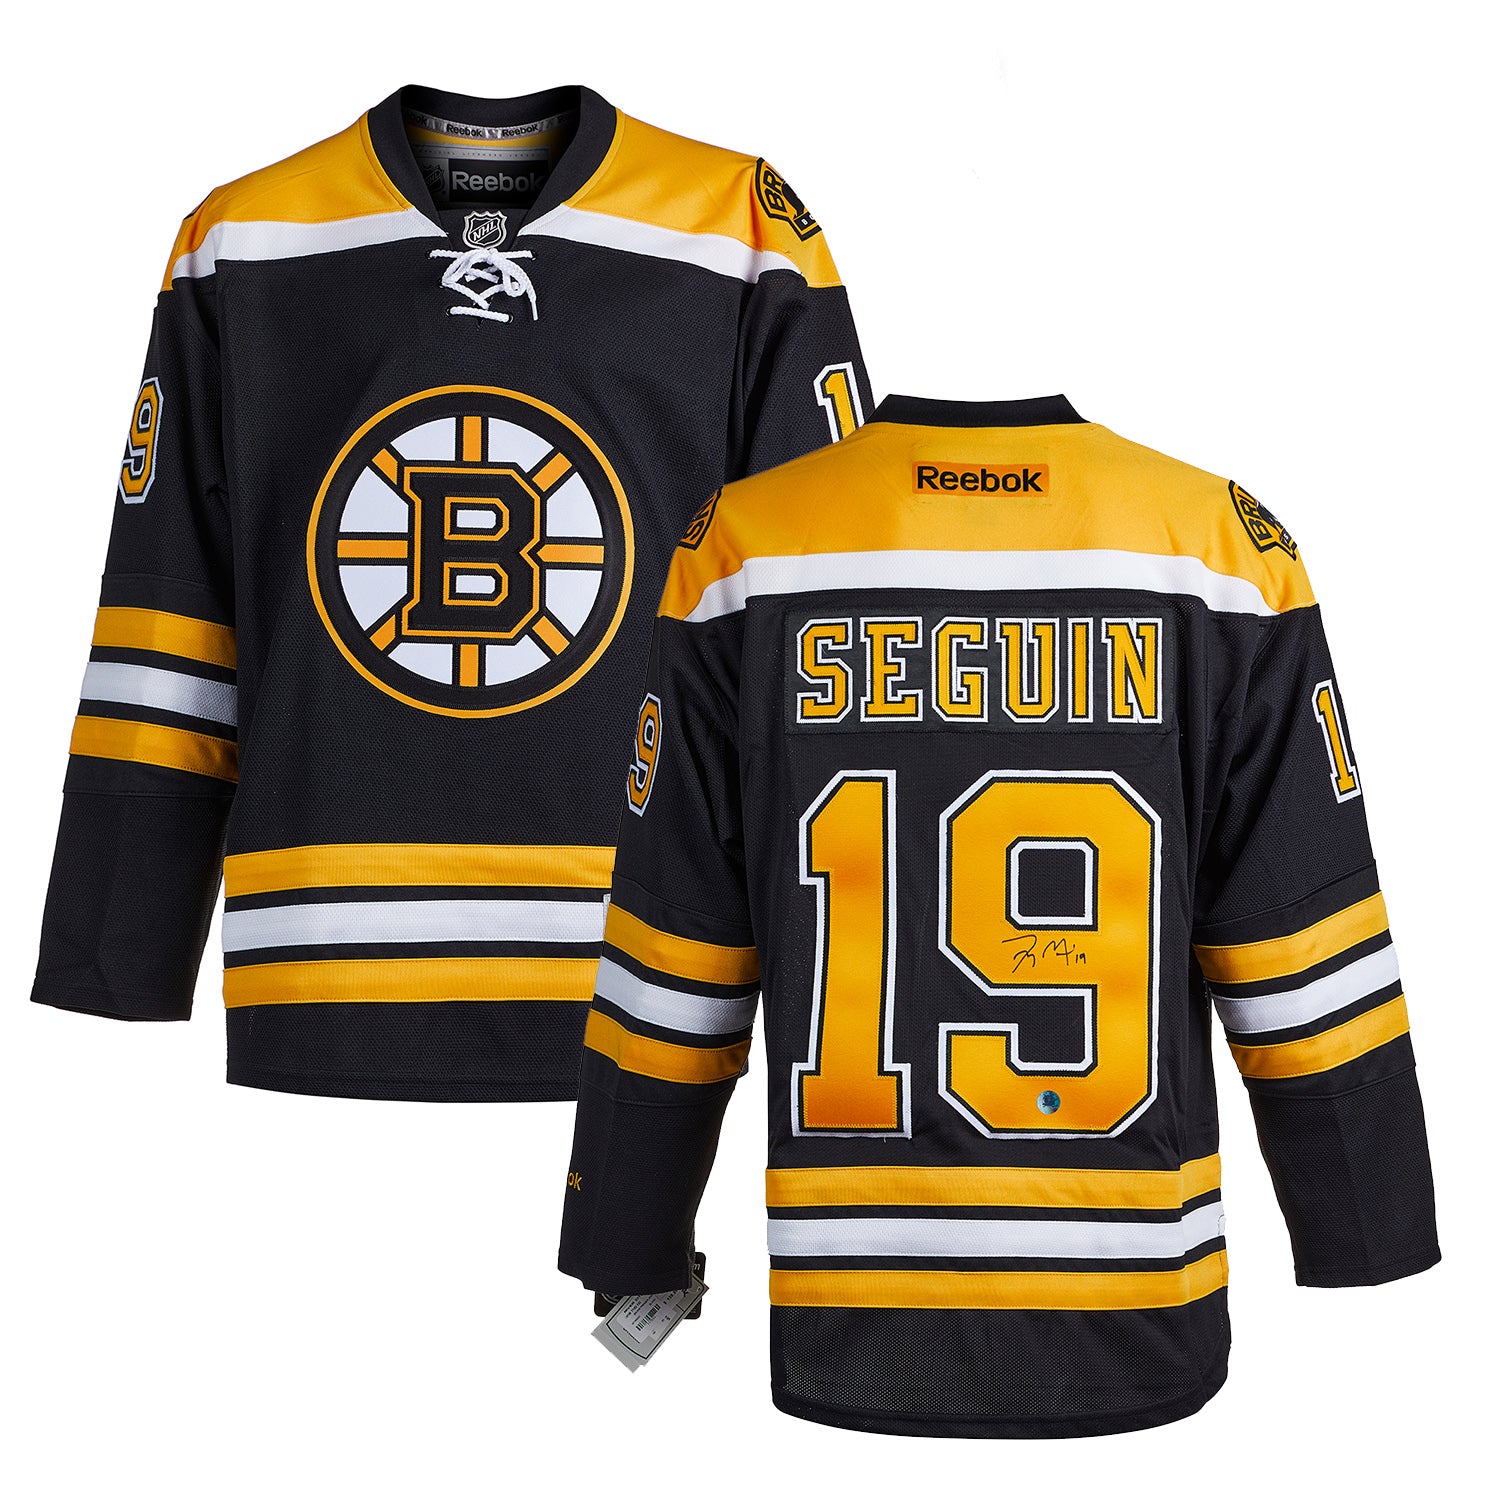 Tyler Seguin Boston Bruins Signed Rookie Reebok Jersey